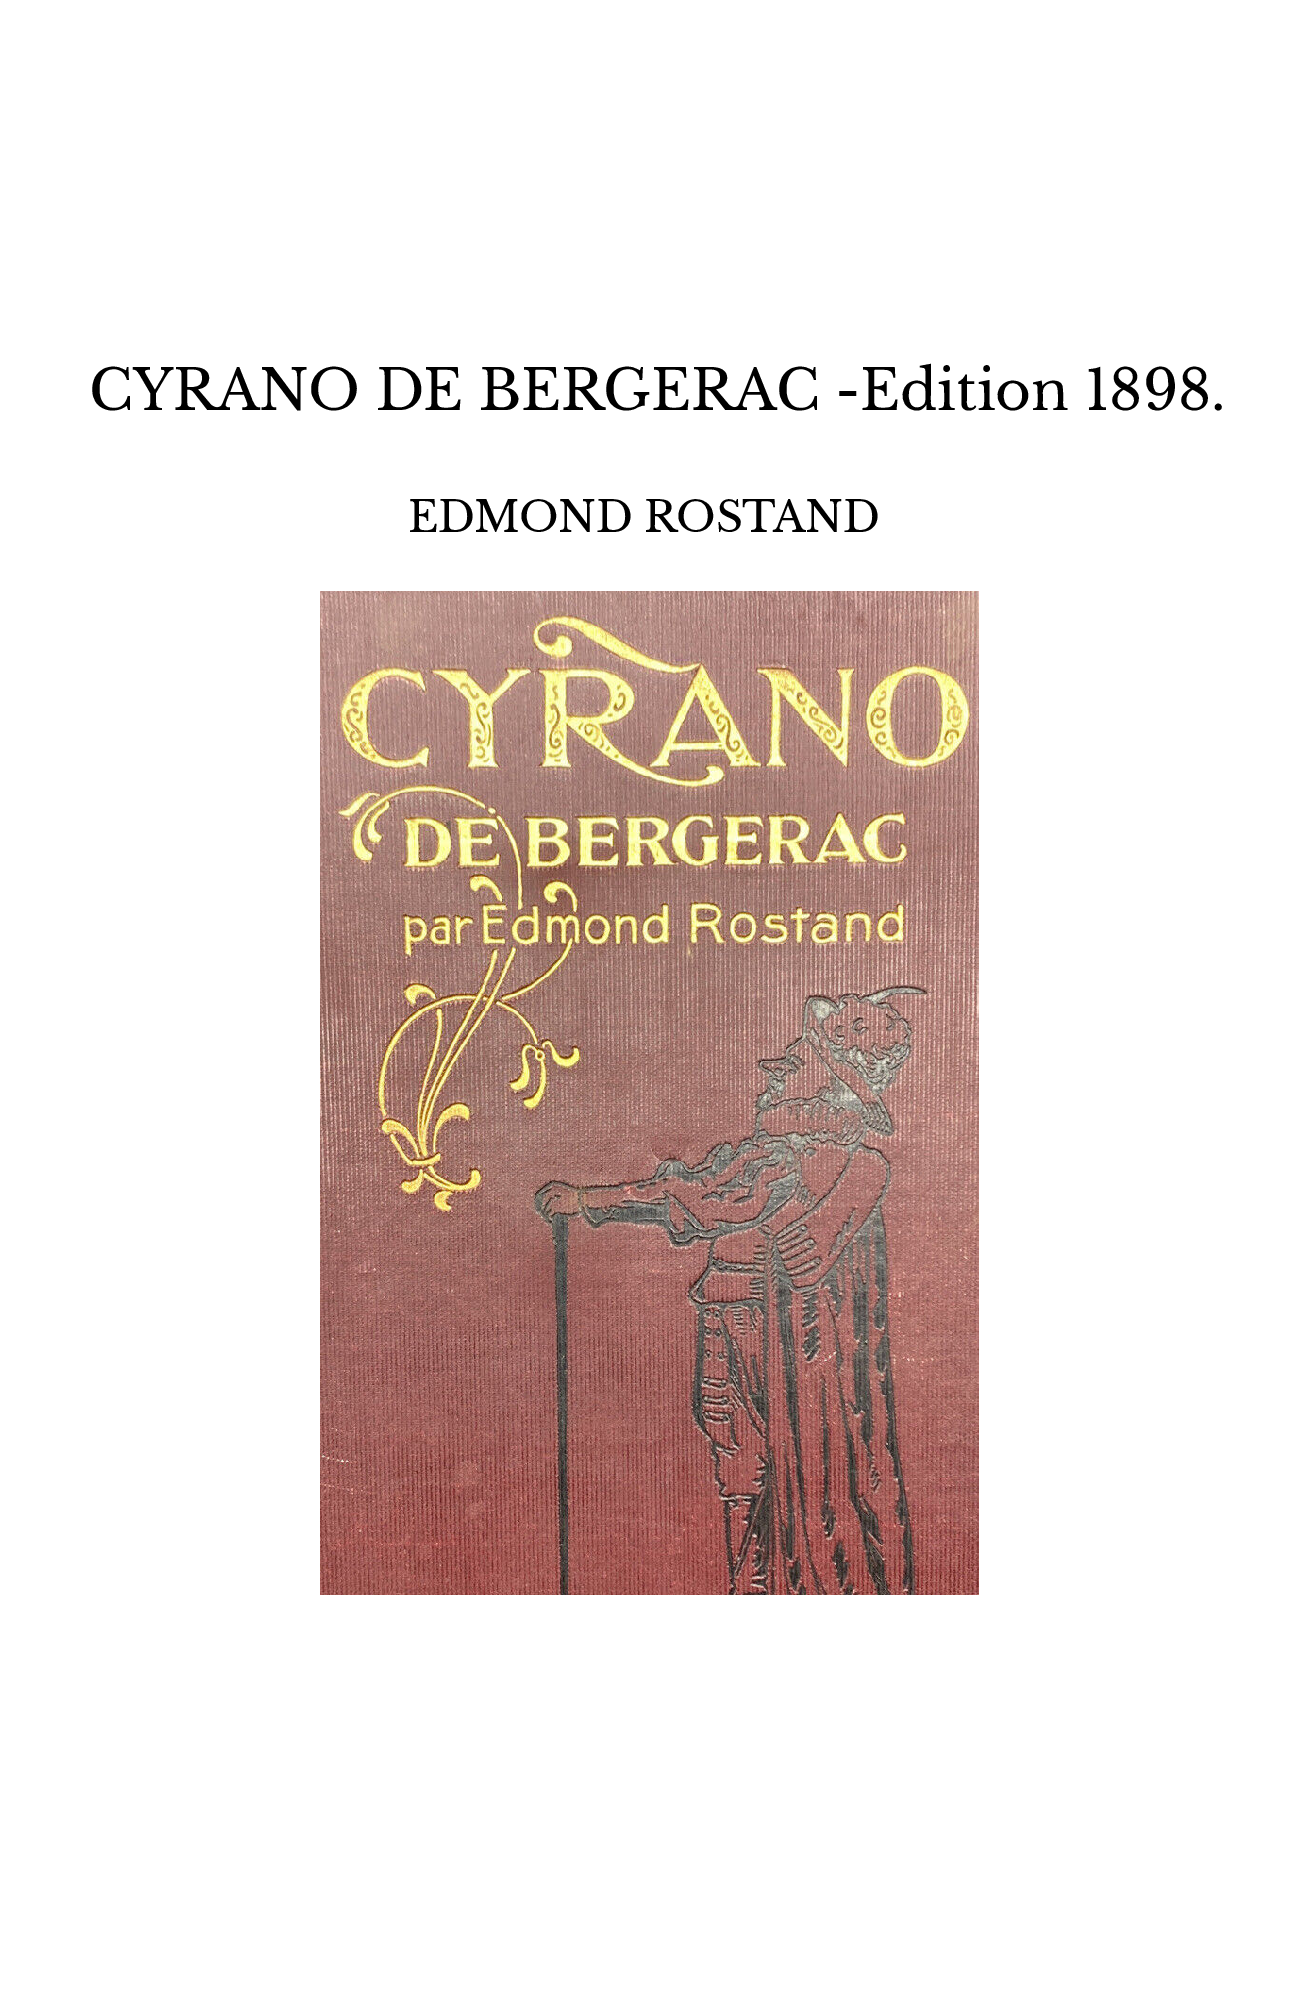  CYRANO DE BERGERAC -Edition 1898.